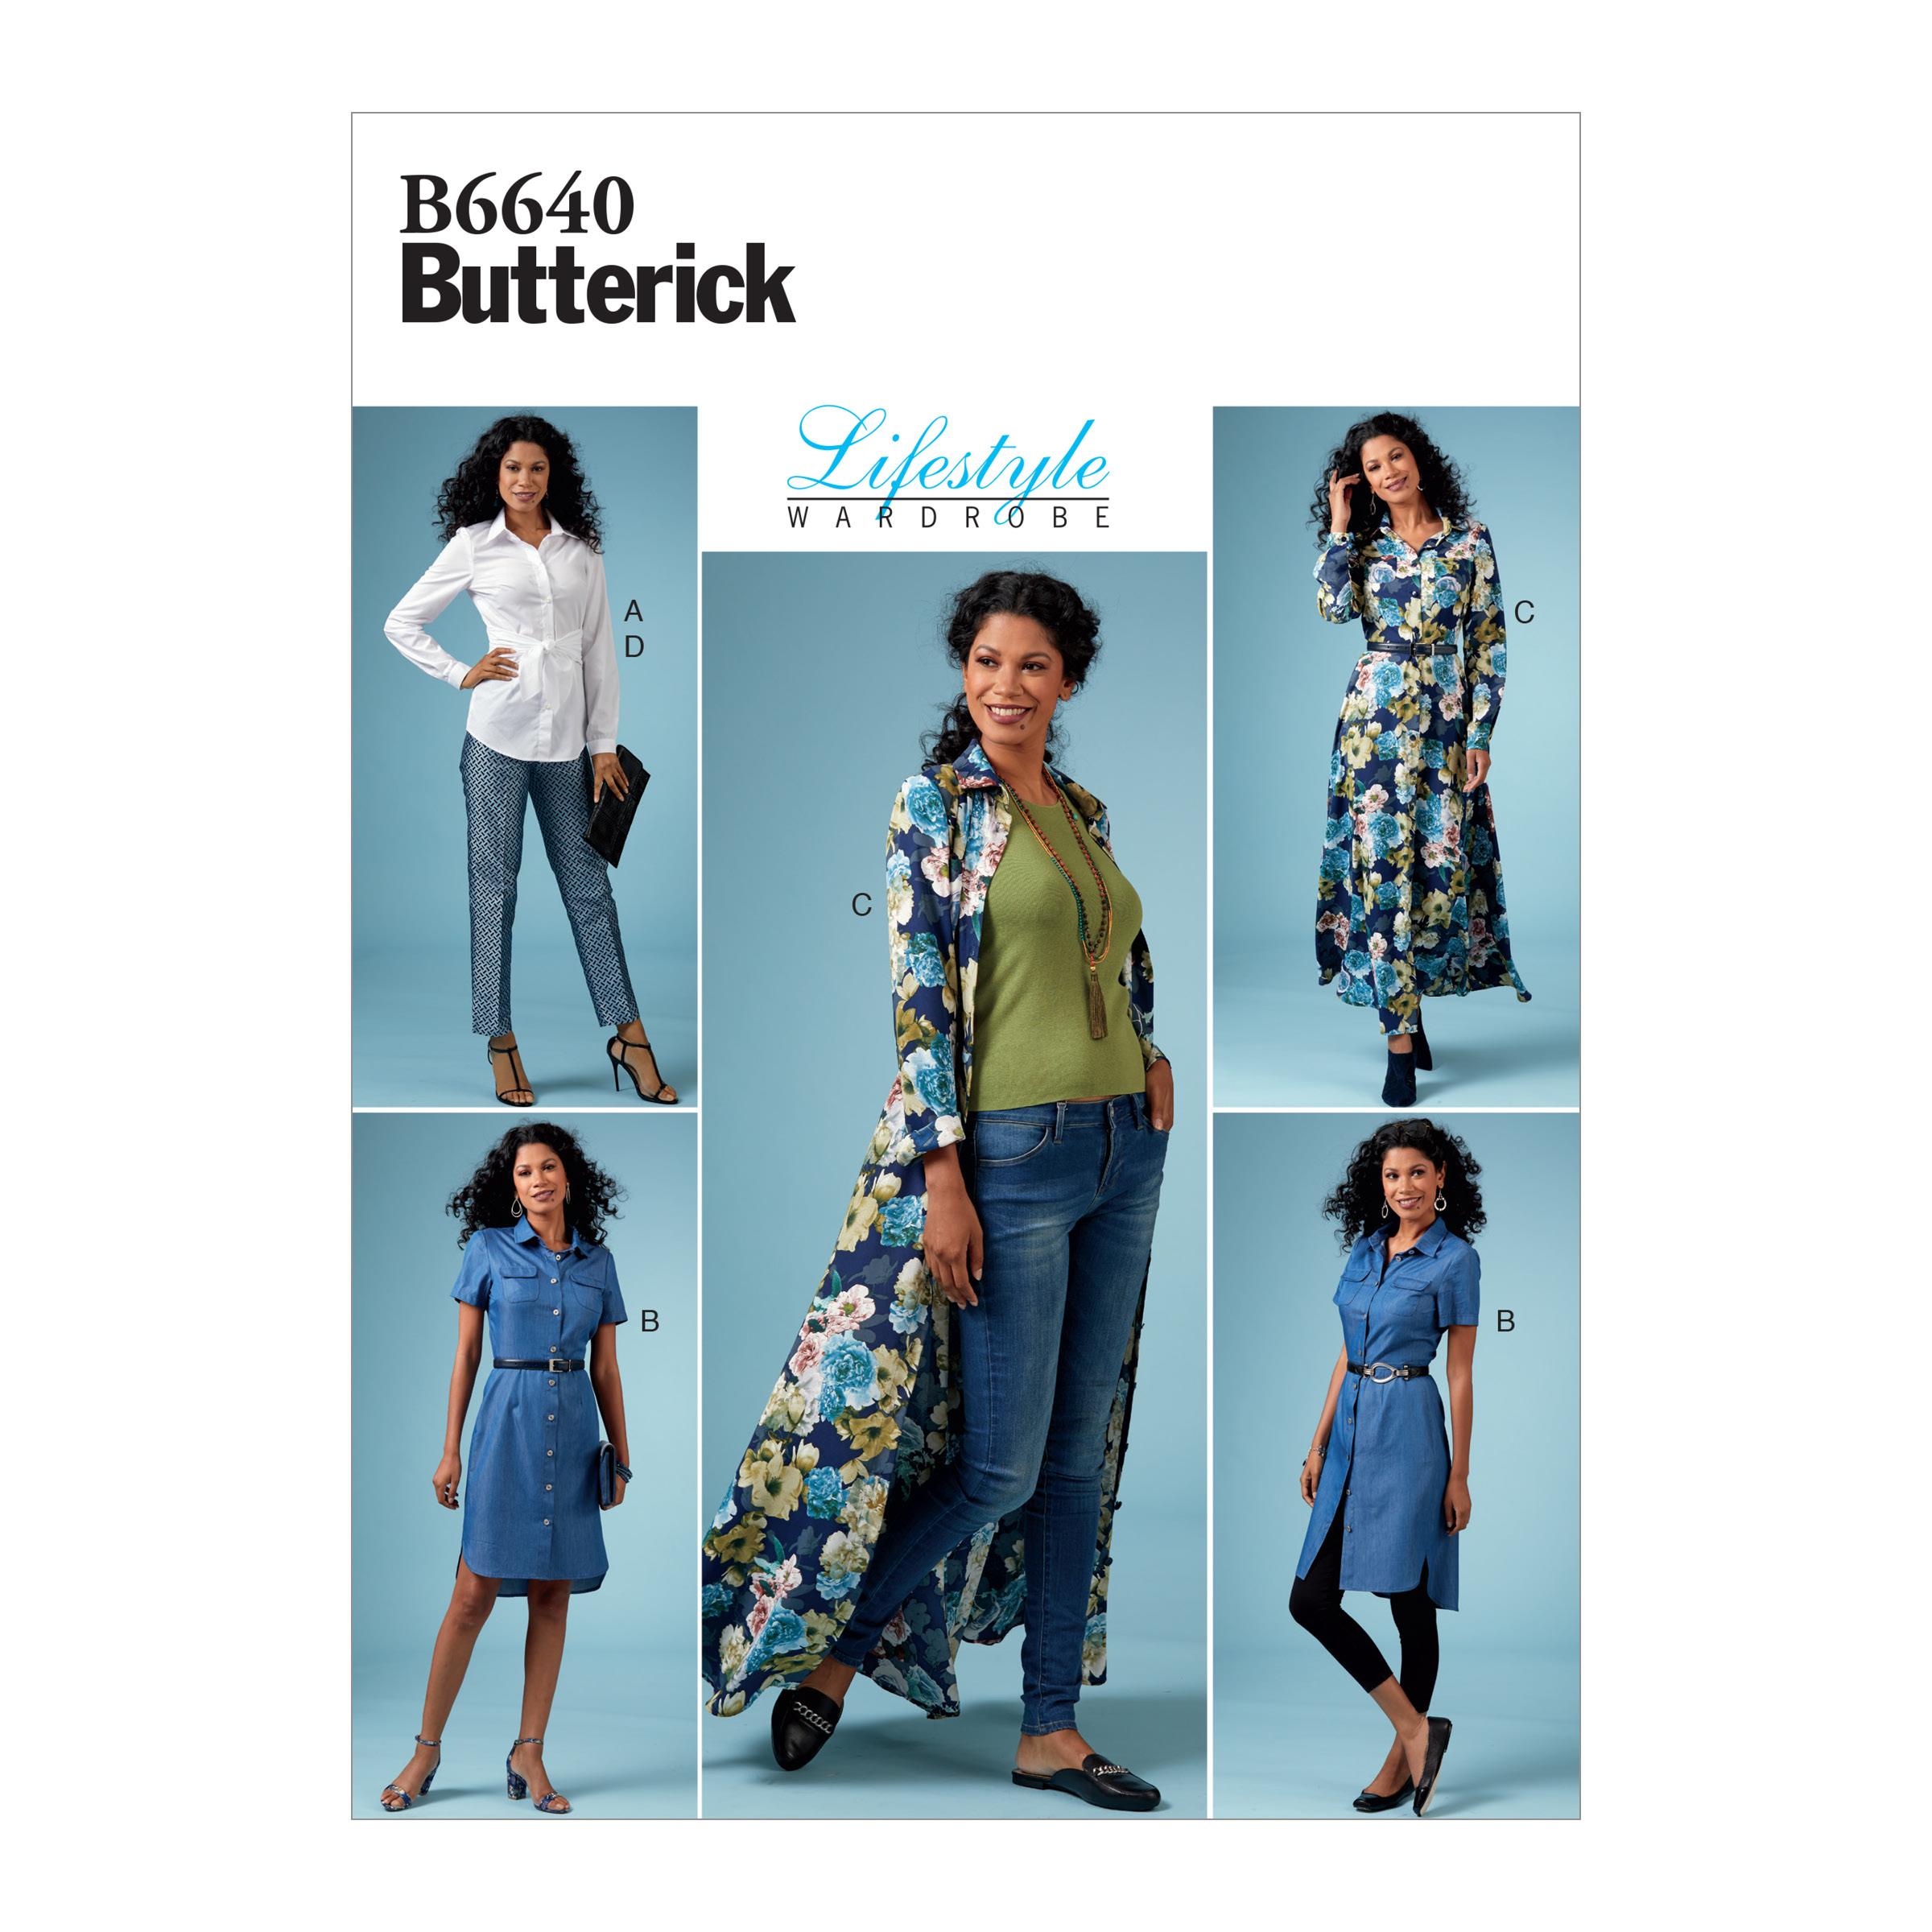 Butterick B6640 Misses'/Misses' Petite Top, Dress and Pants